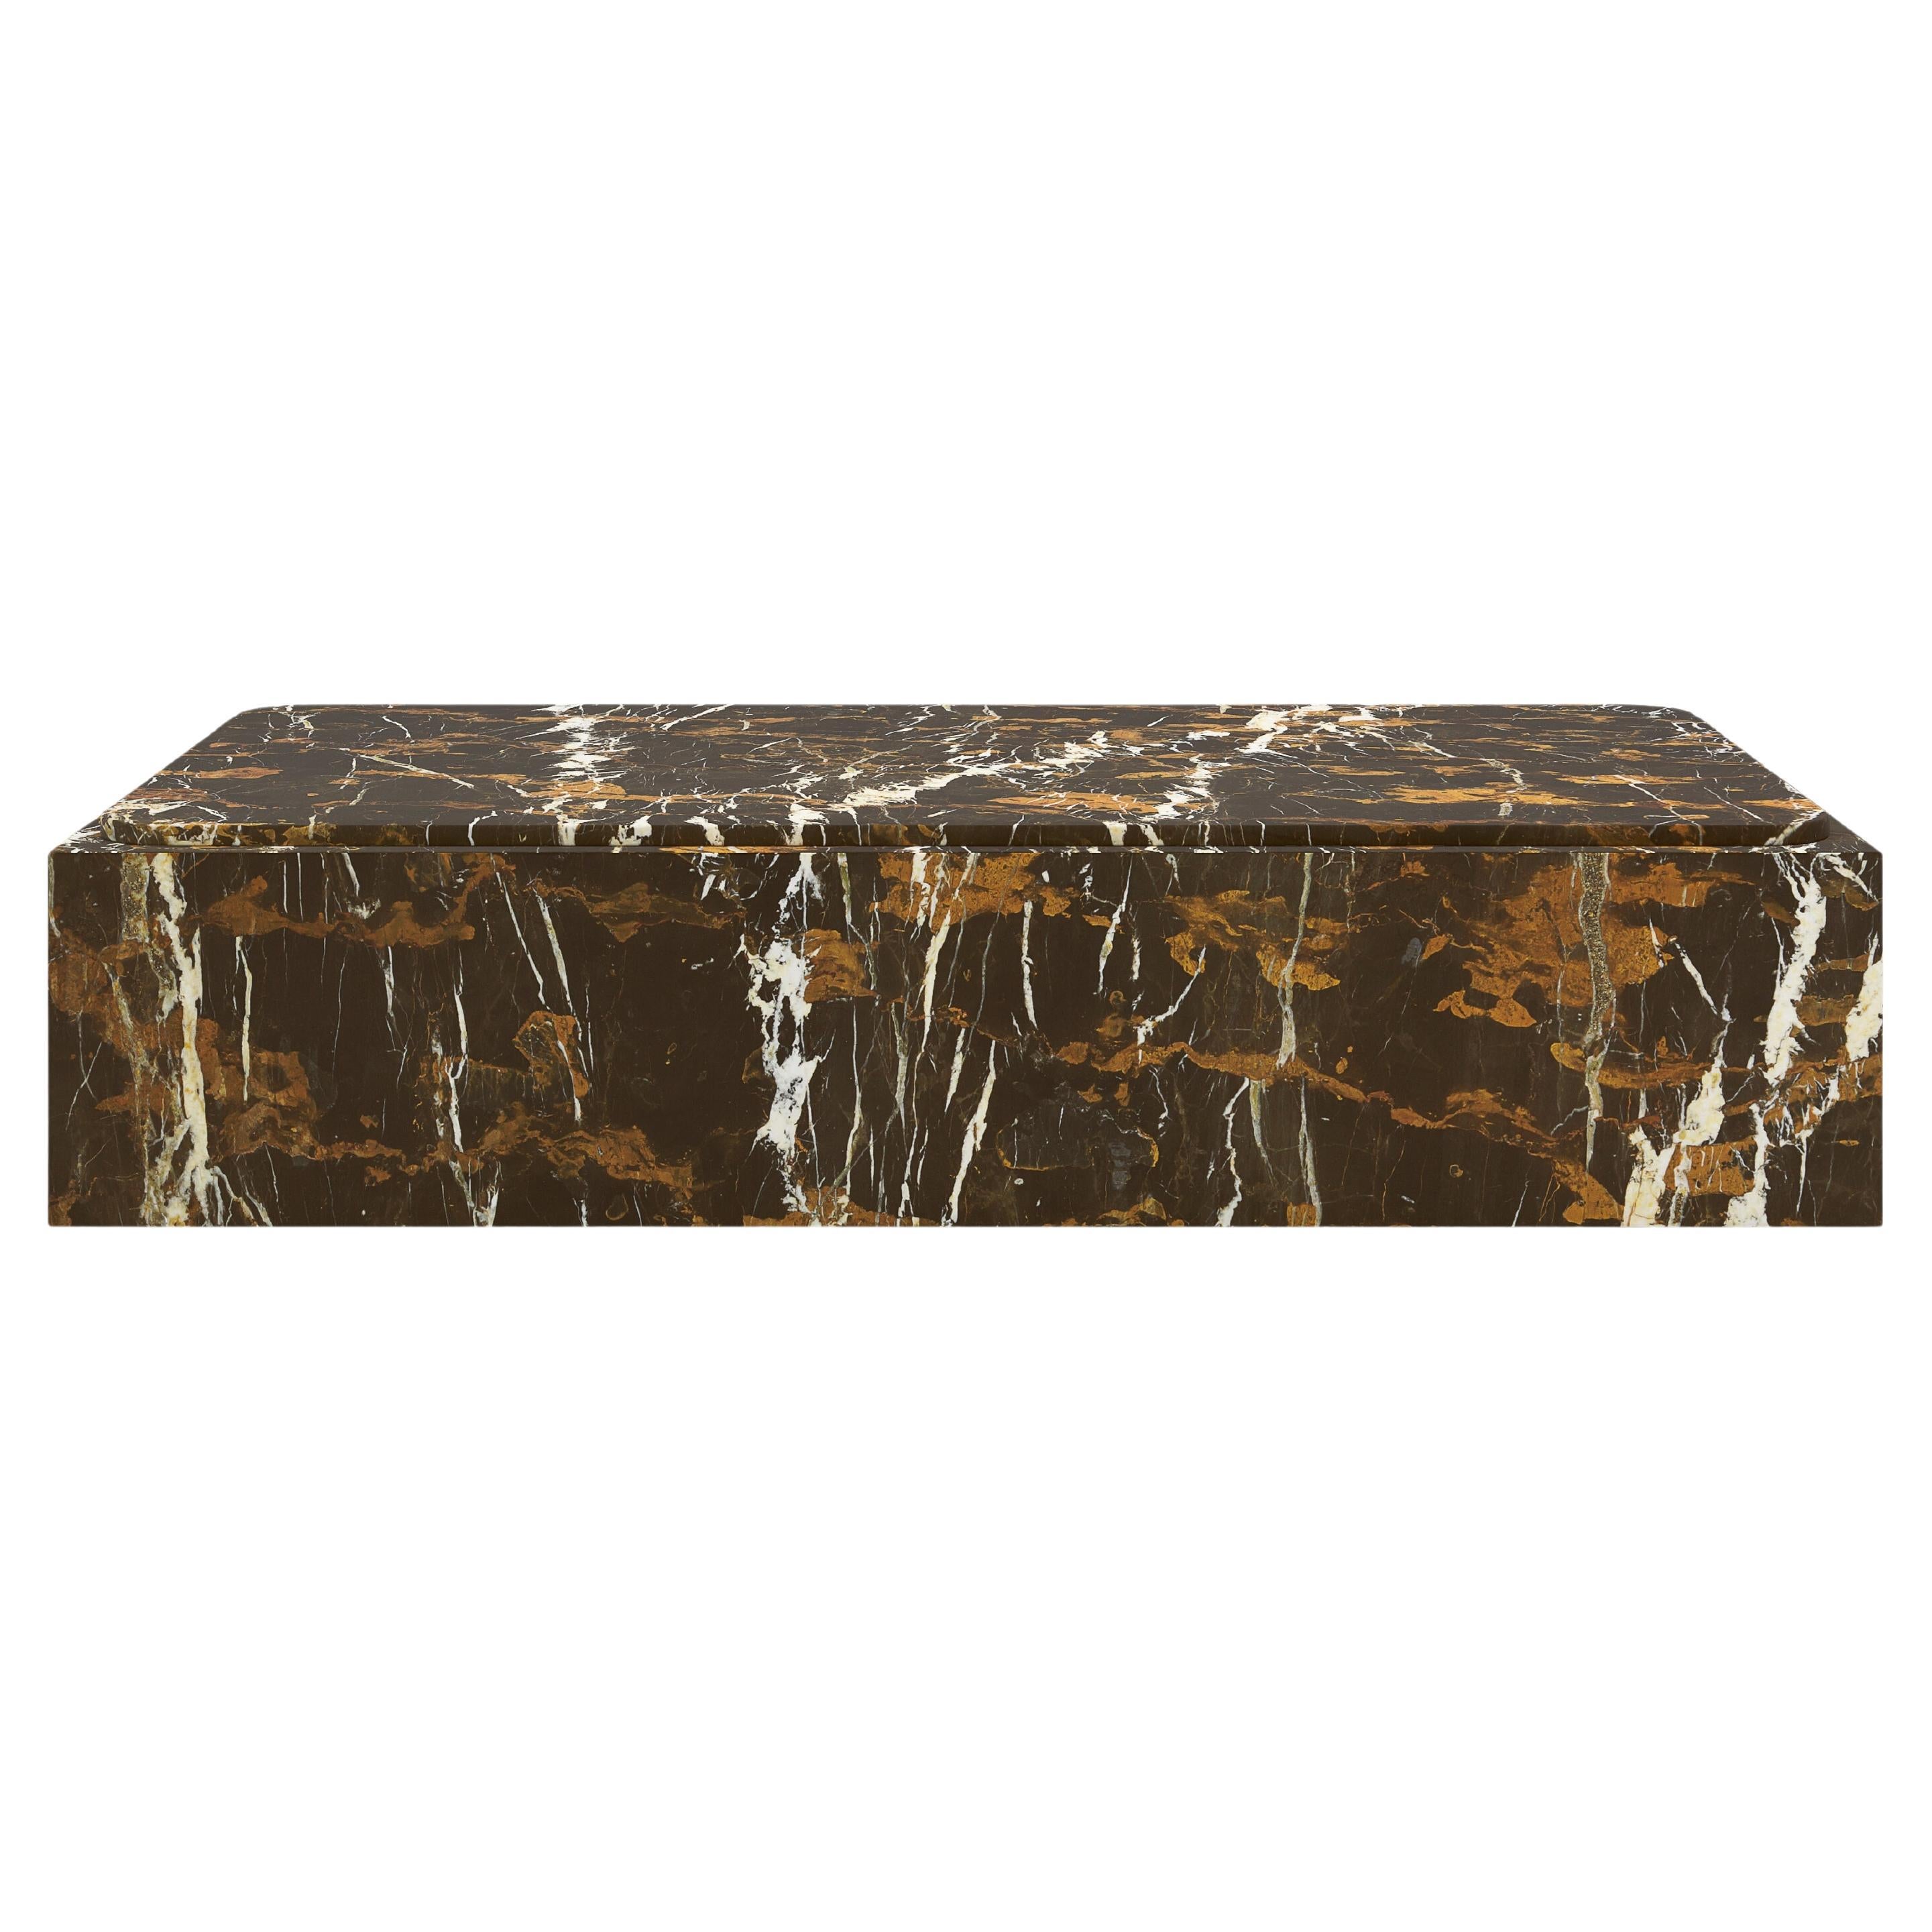 FORM(LA) Cubo Rectangle Plinth Coffee Table 60”L x 36”W x 13”H Nero Marble For Sale